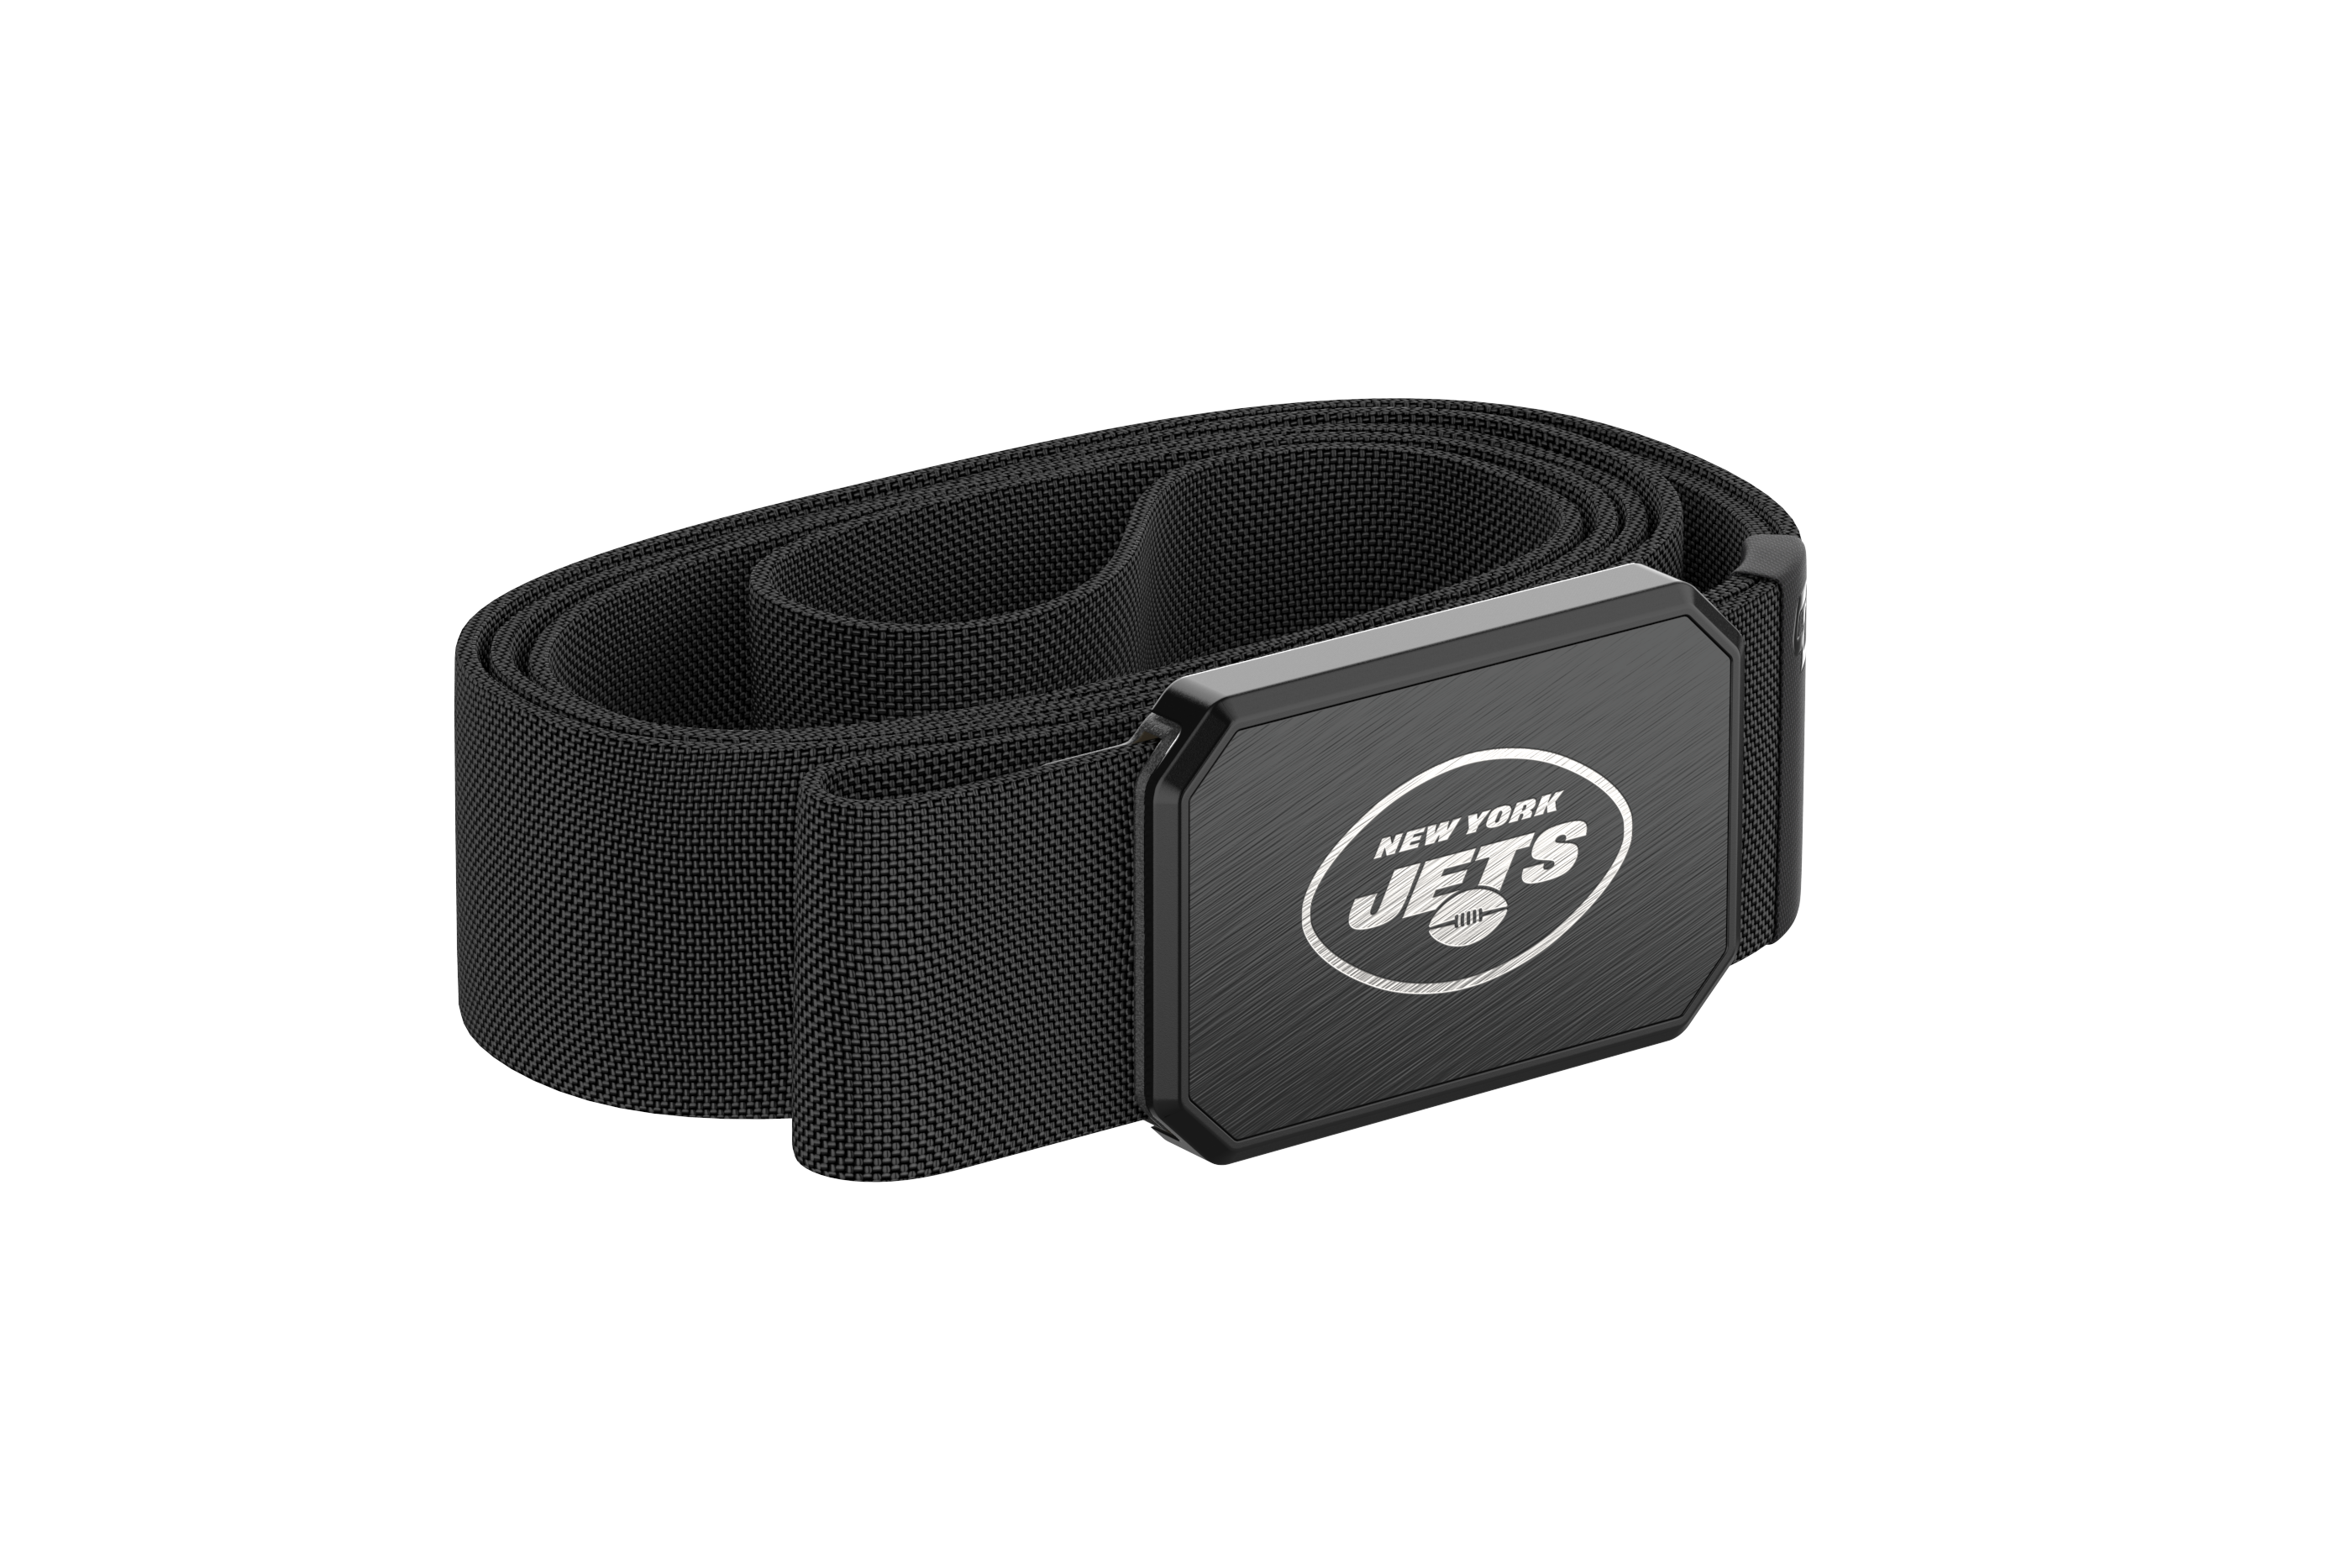 NFL New York Jets Groove Belt Groove Belt Groove Belt